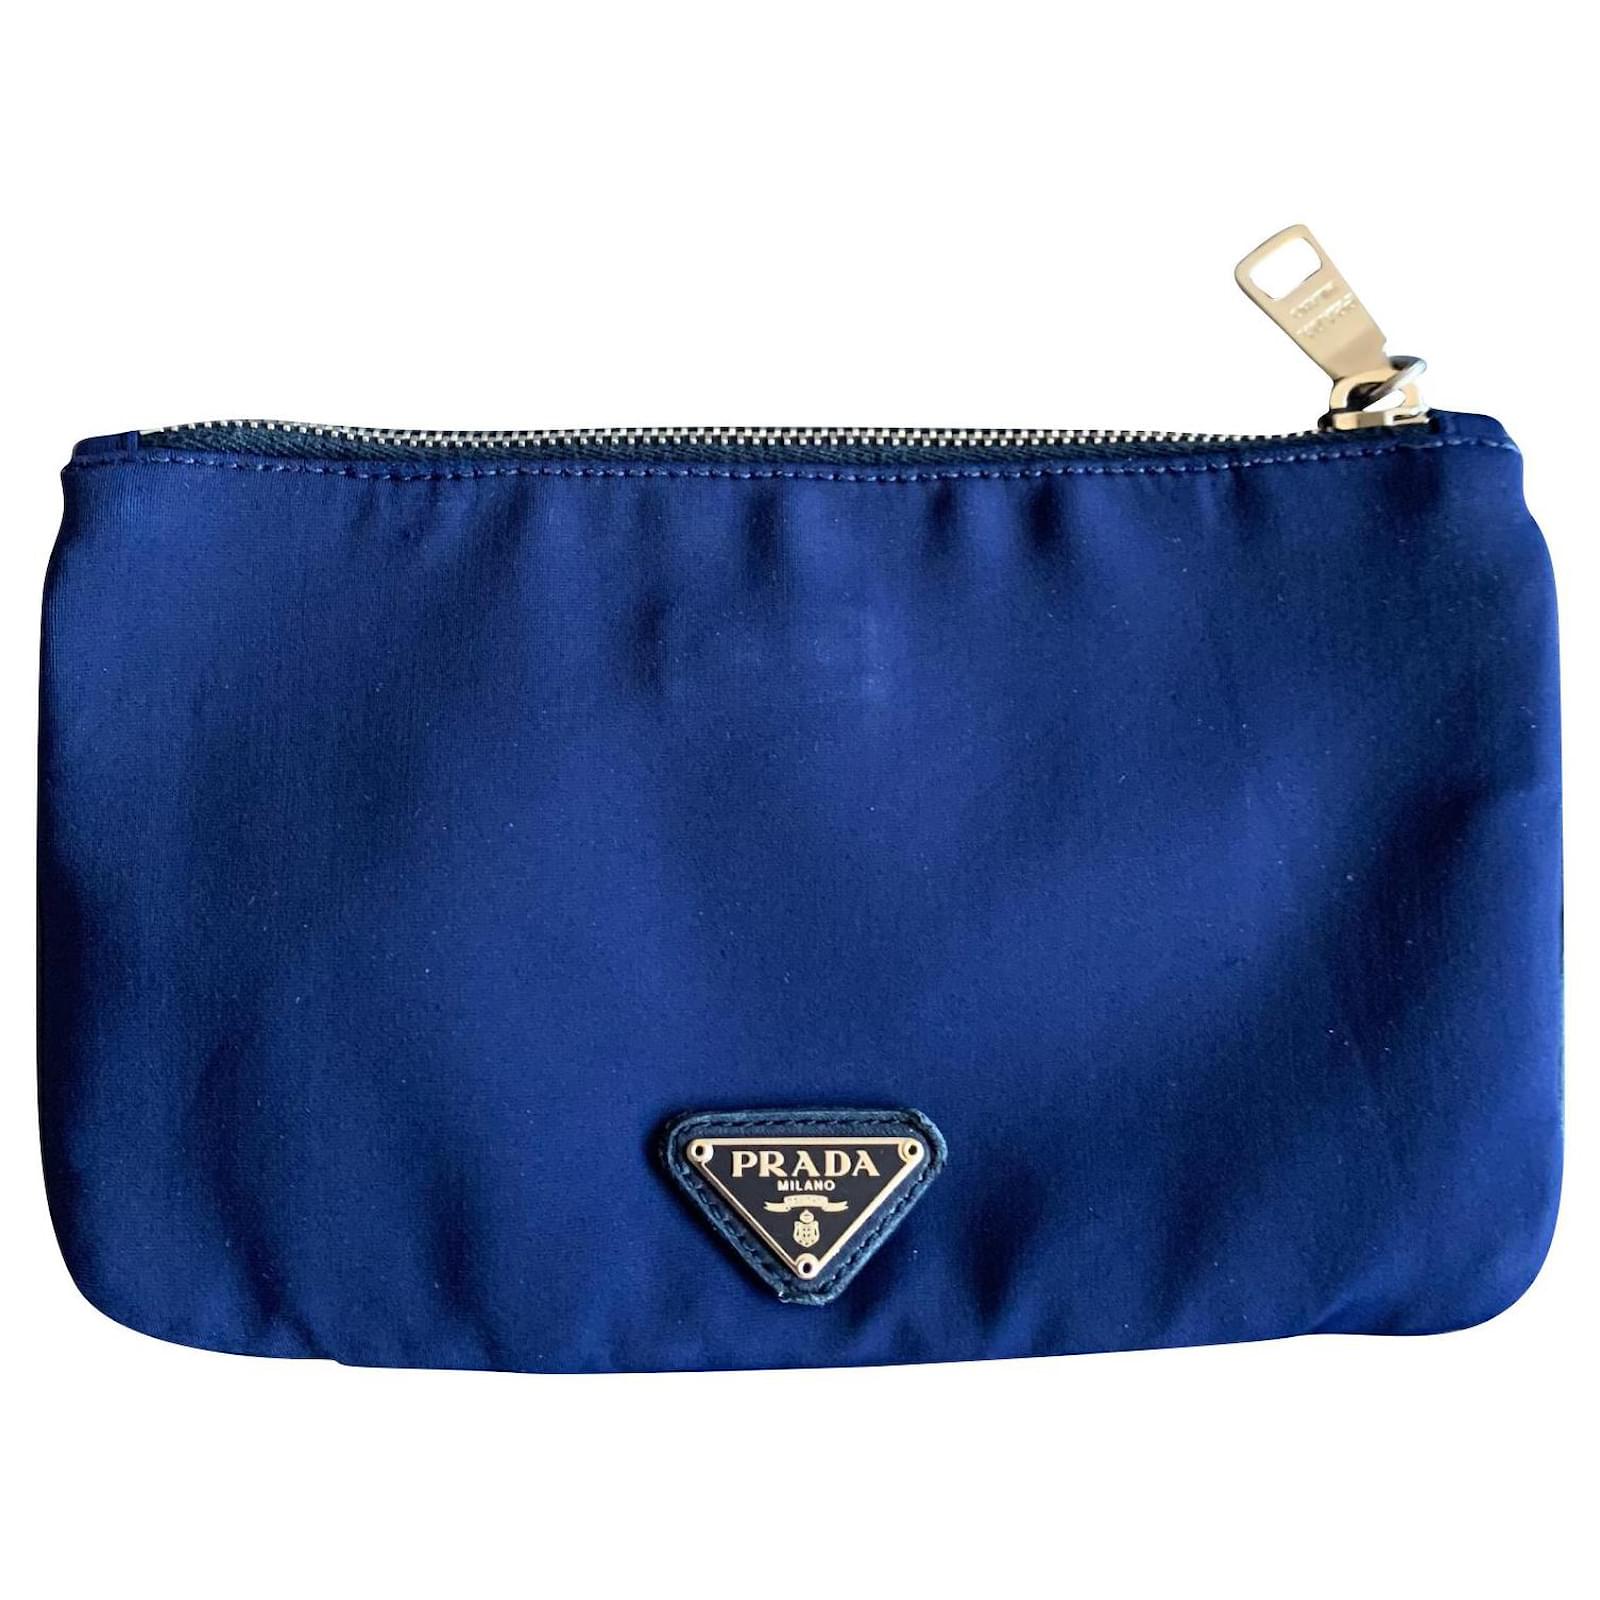 synthetic prada mini bag purse clutch